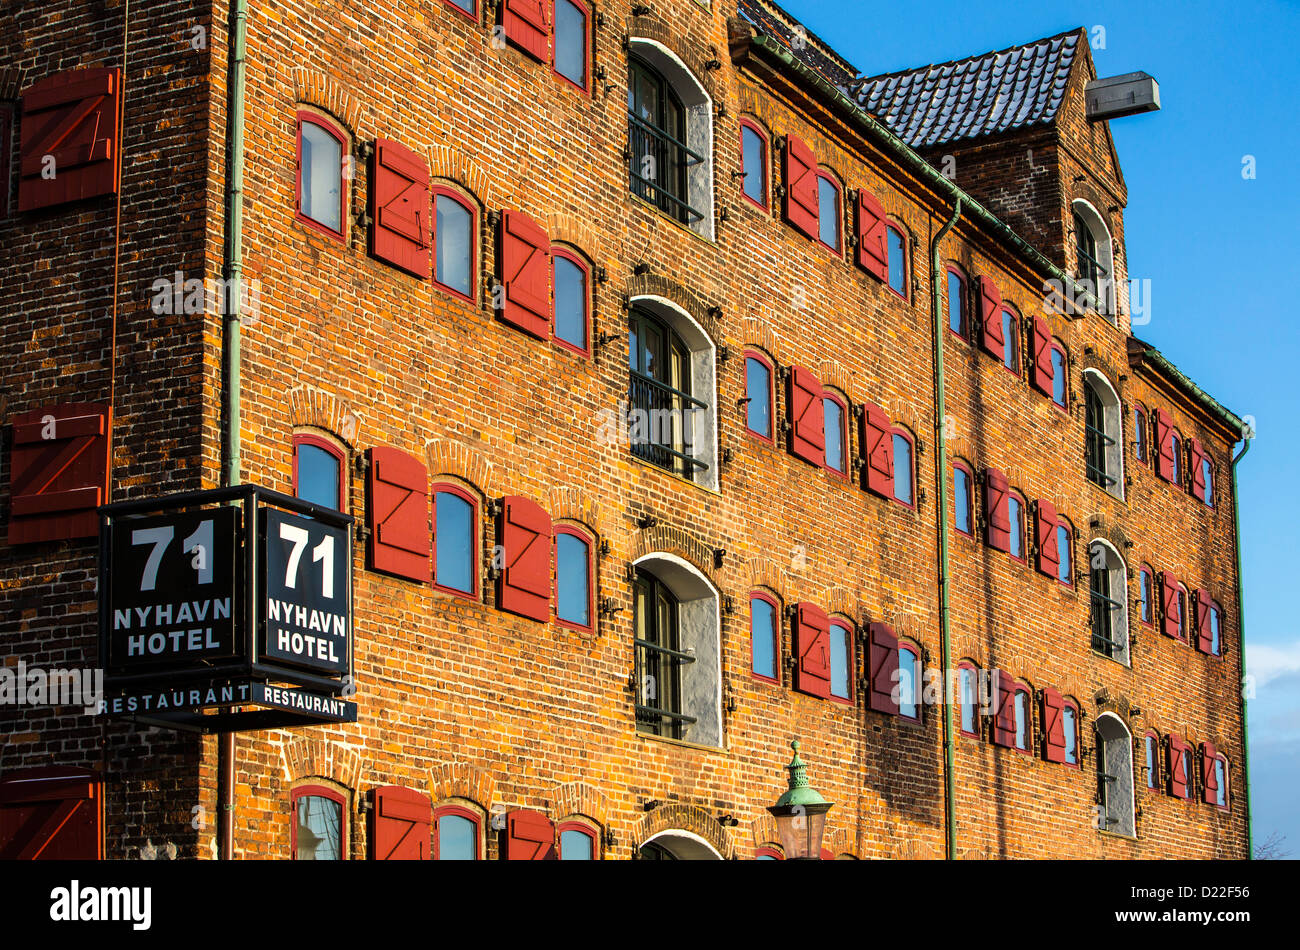 Facade of an old harbor building, today hotel, Nyhavn Hotel 71. Copenhagen, Denmark, Europe. Stock Photo